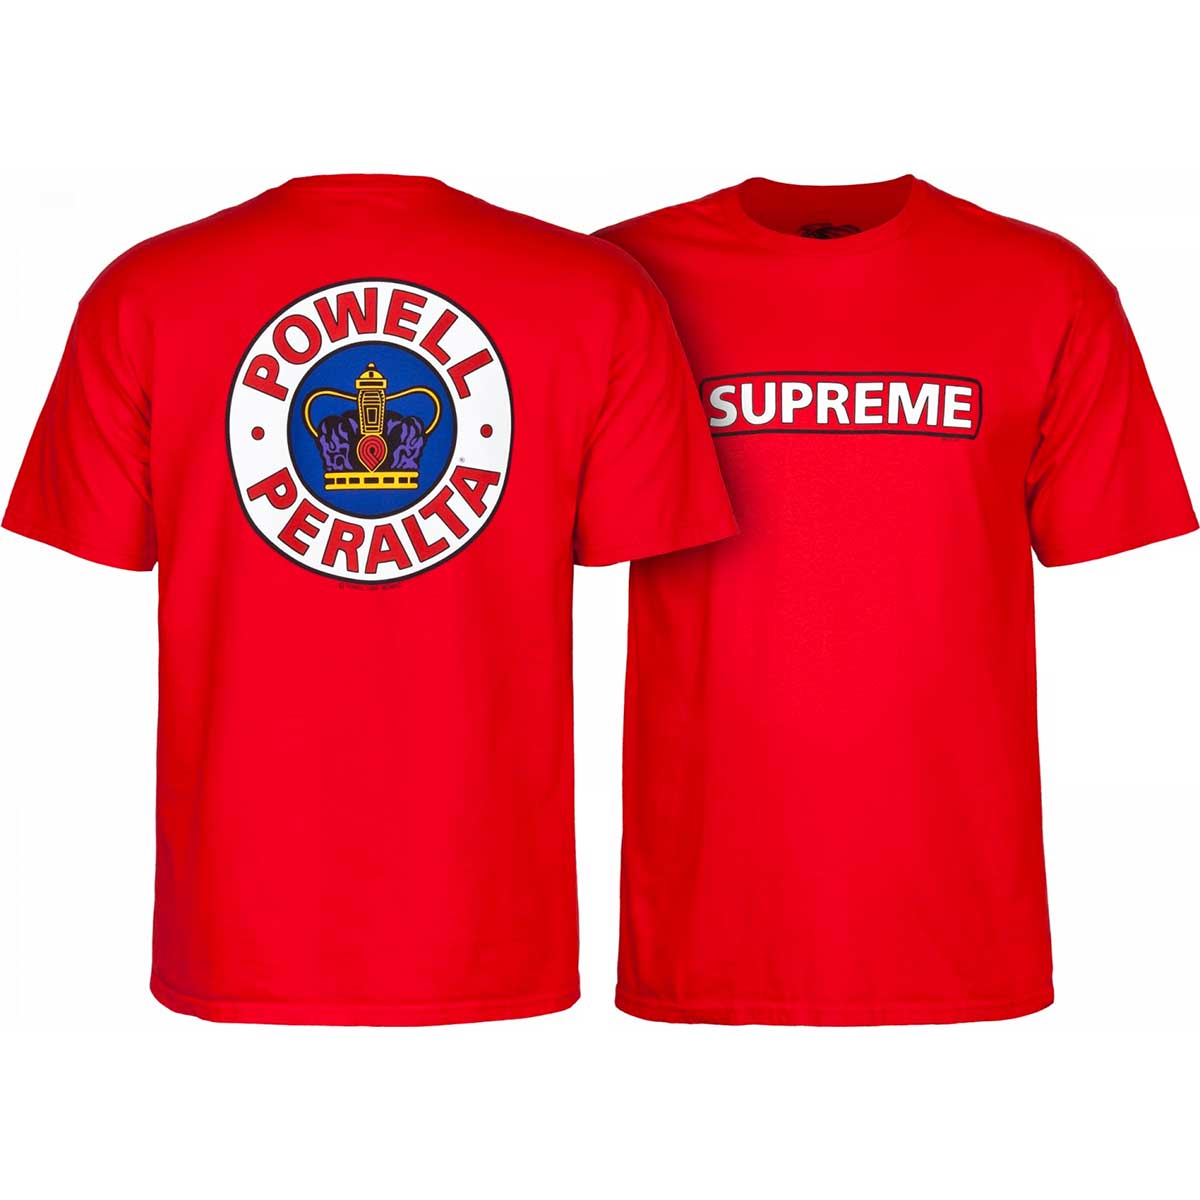 Powell Peralta Supreme t-shirt logotipo skateboard